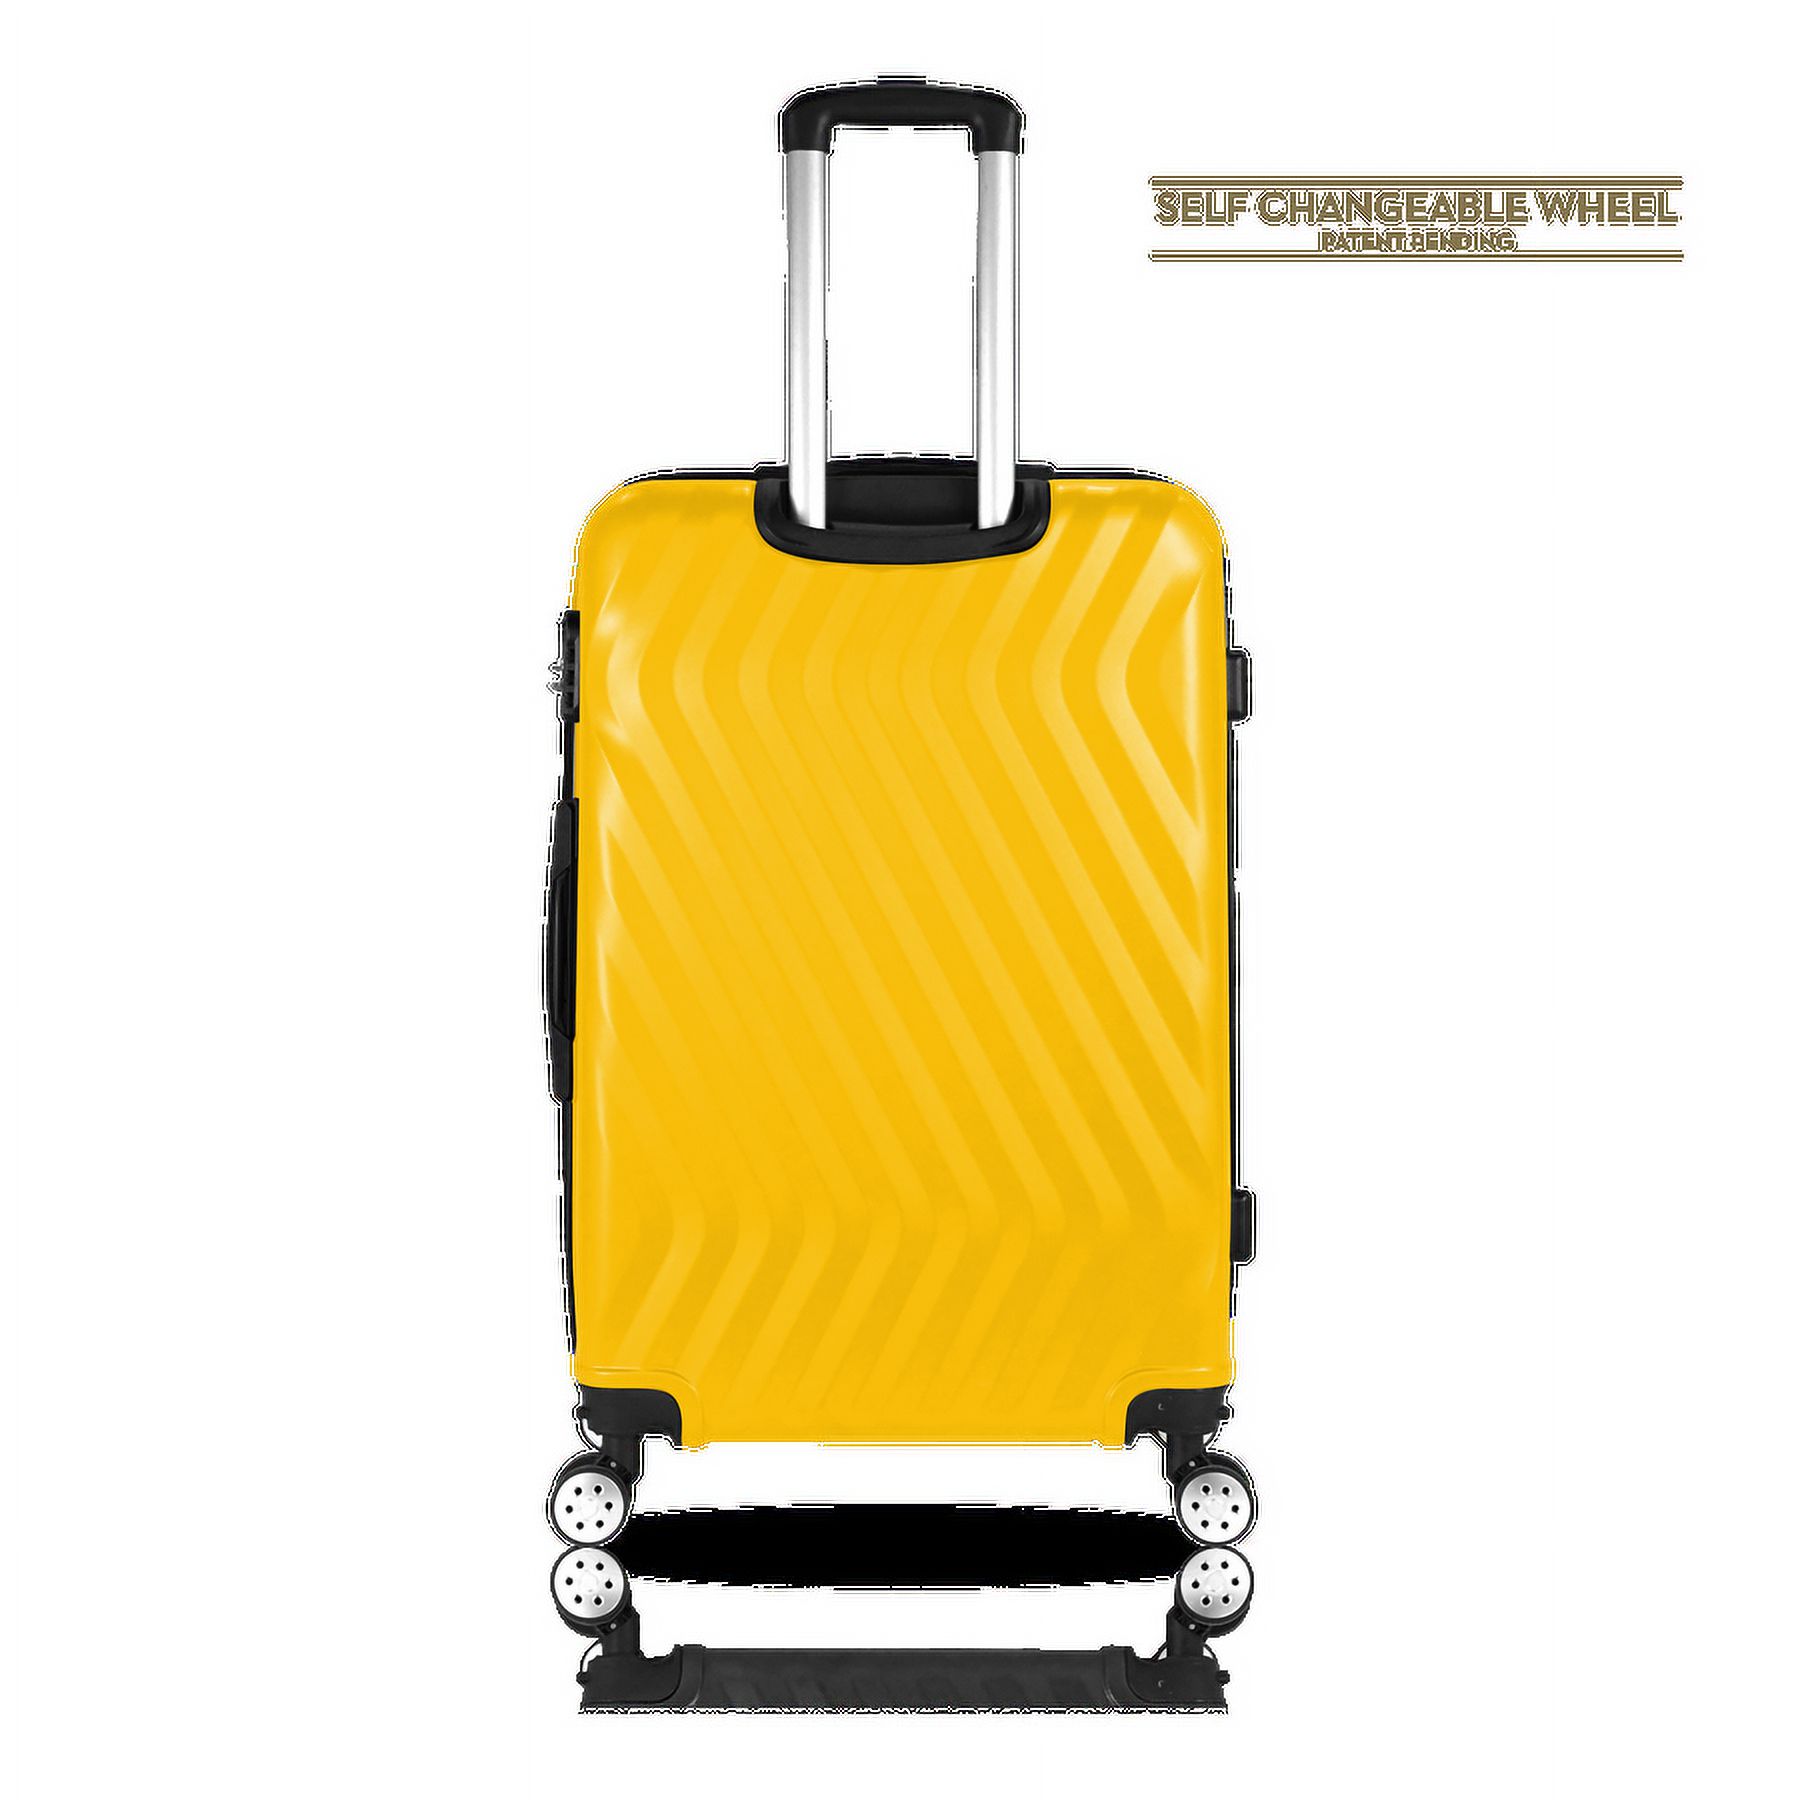 MUTEVOLE 20" Carry-On Luggage Bag Travel Suitcase - image 2 of 4